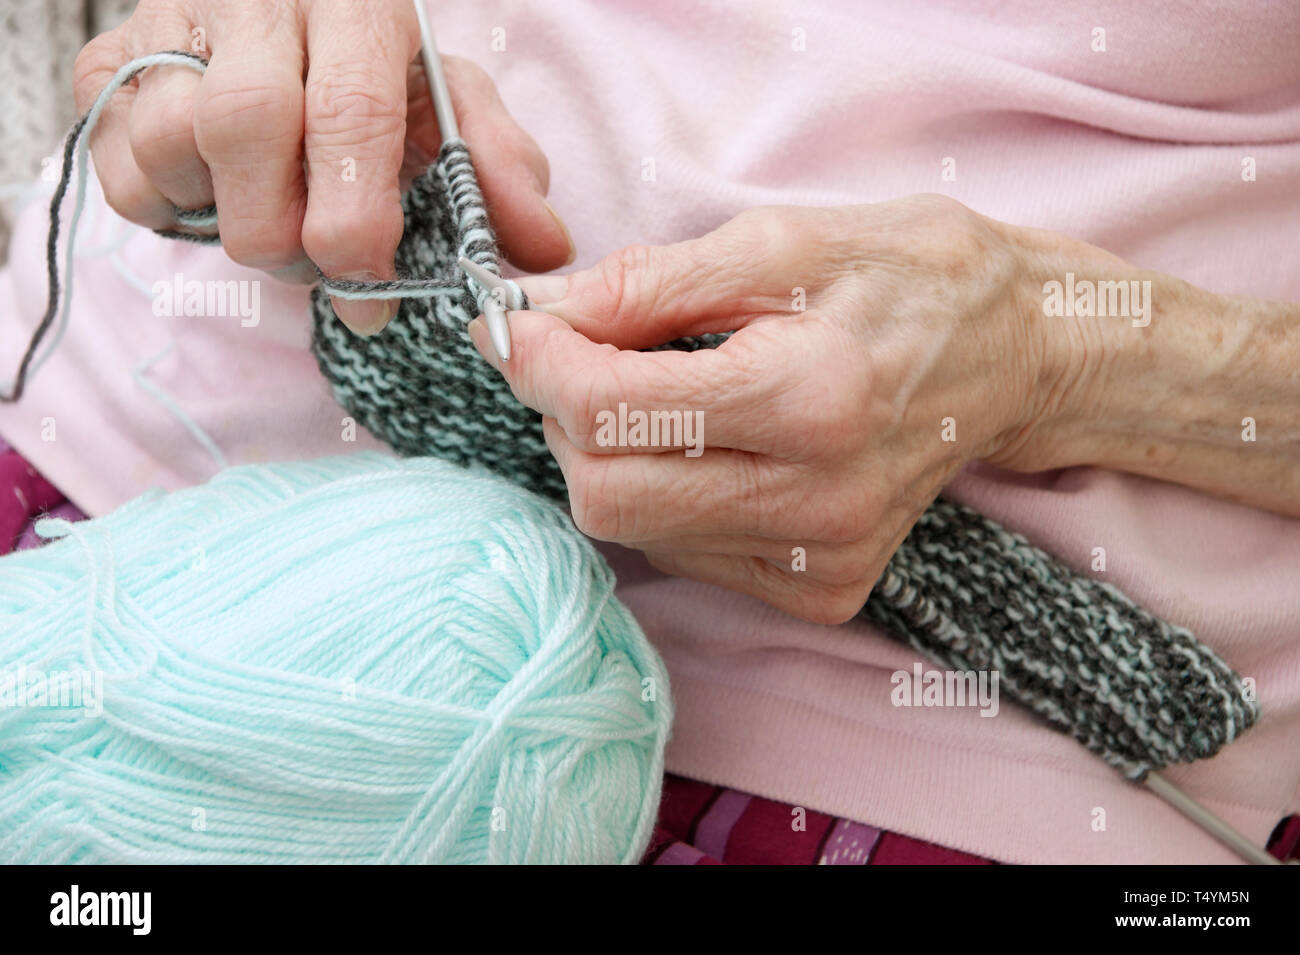 Elderly woman knitting a garment Stock Photo